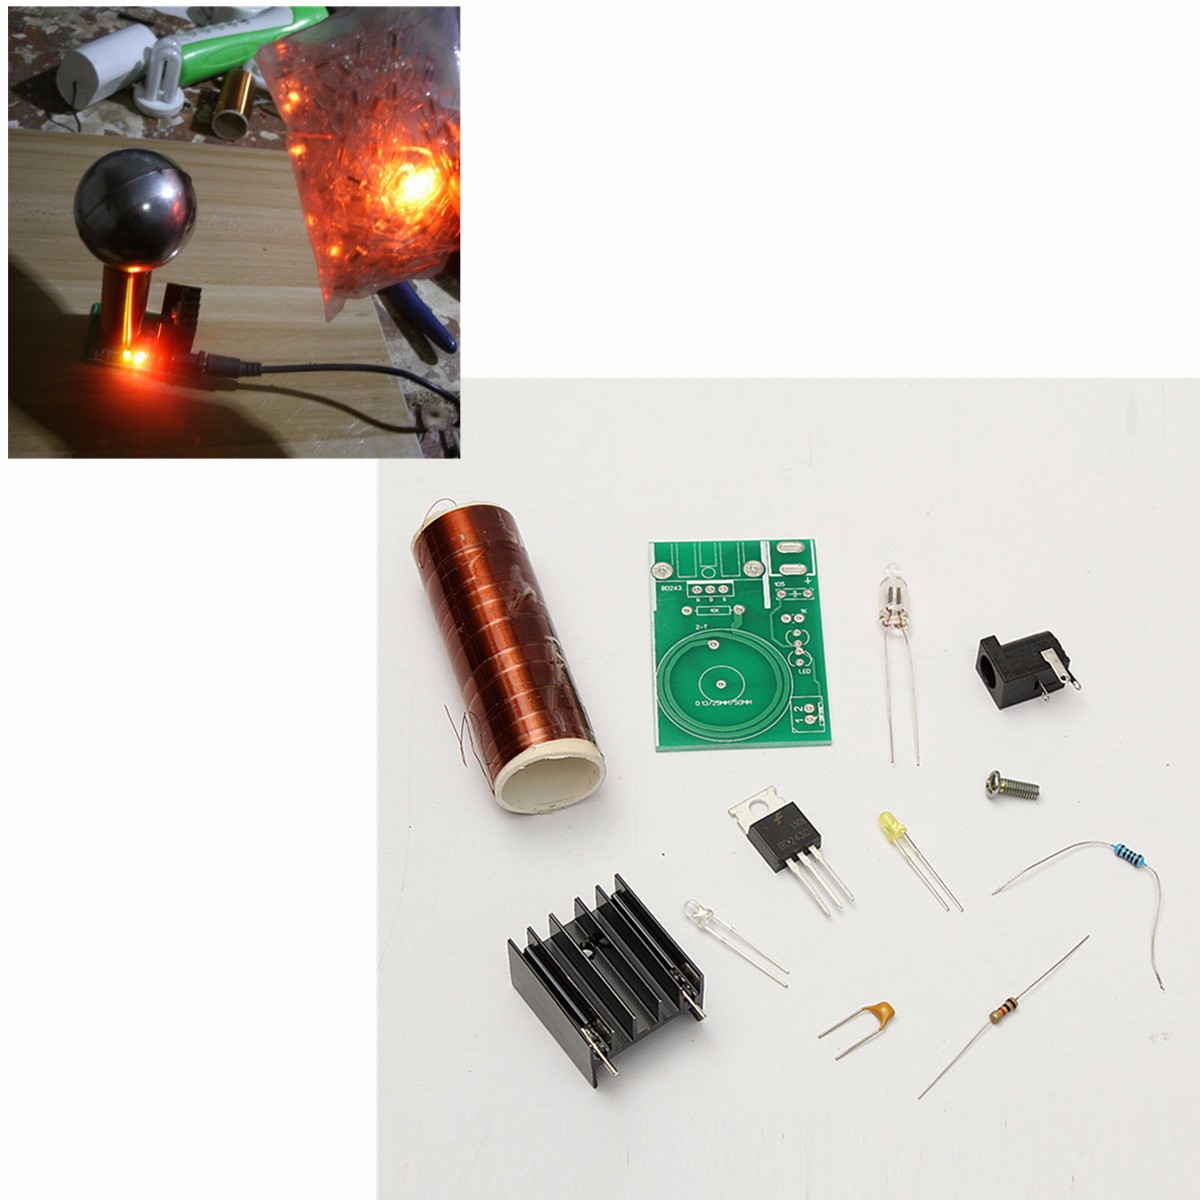 12V Mini Wireless Electric Power Transmission Lighting For Tesla Coil DIY Kit